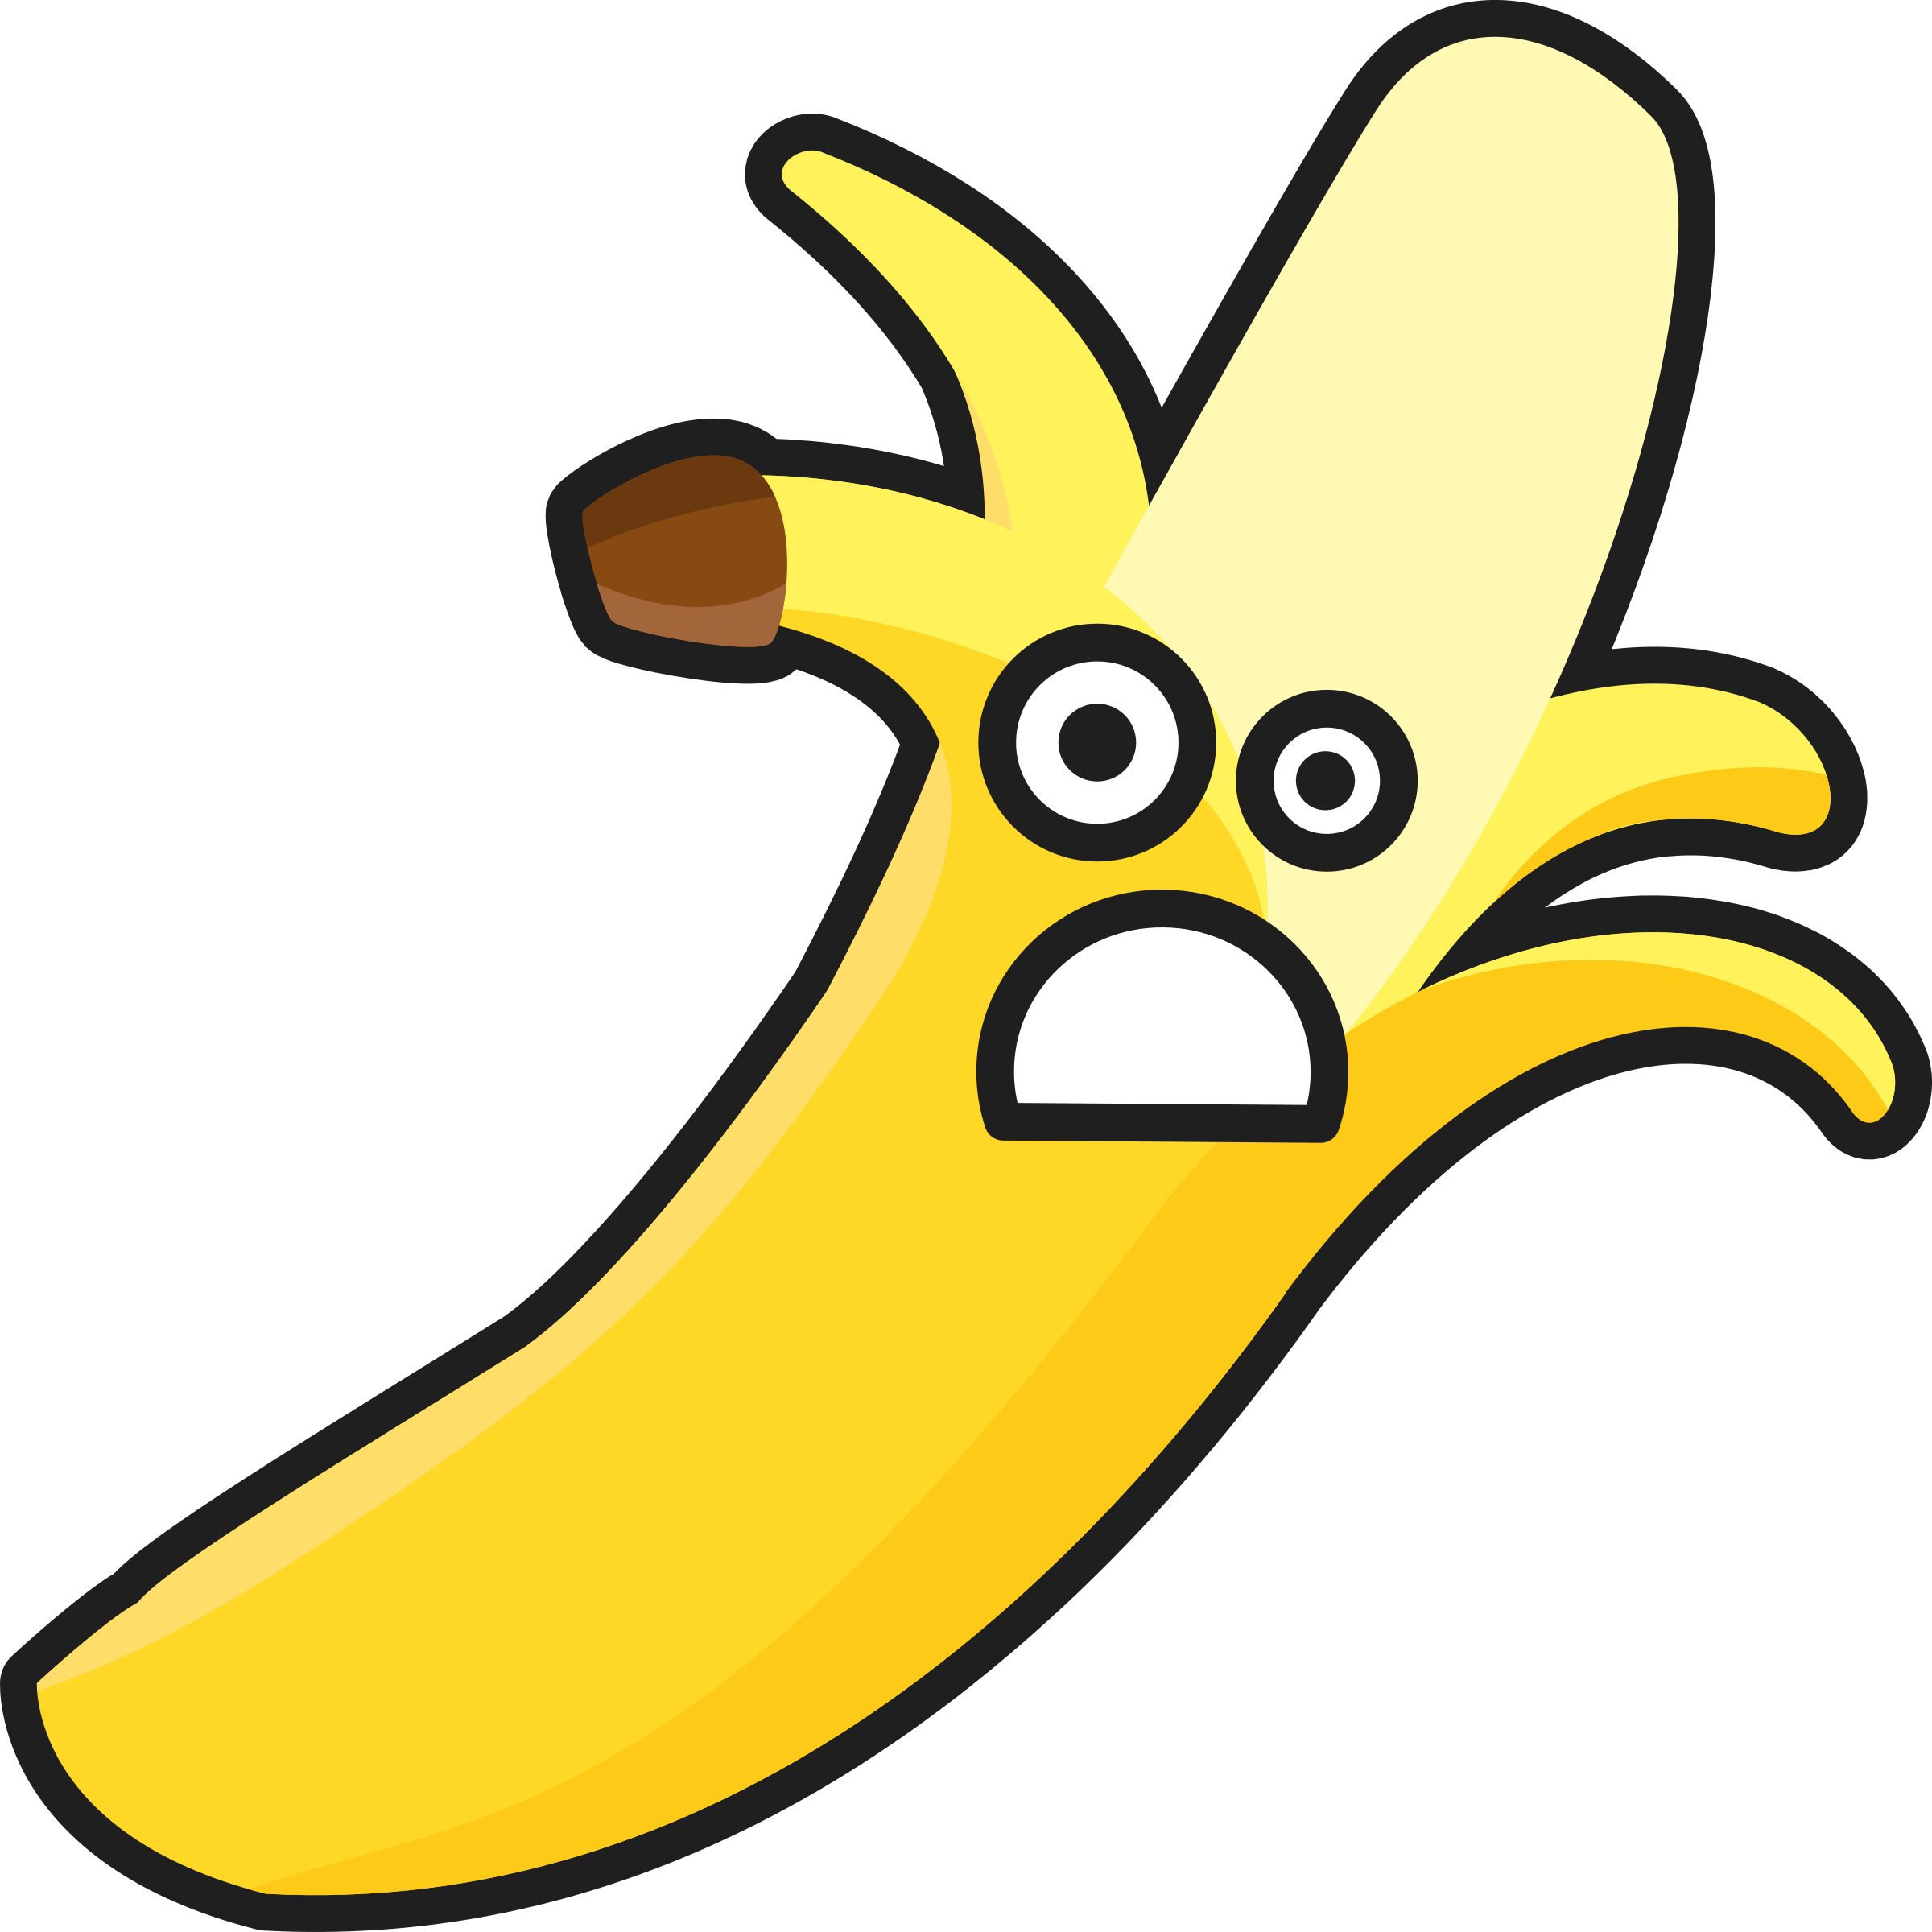 This Free Icons Png Design Of Sad Banana